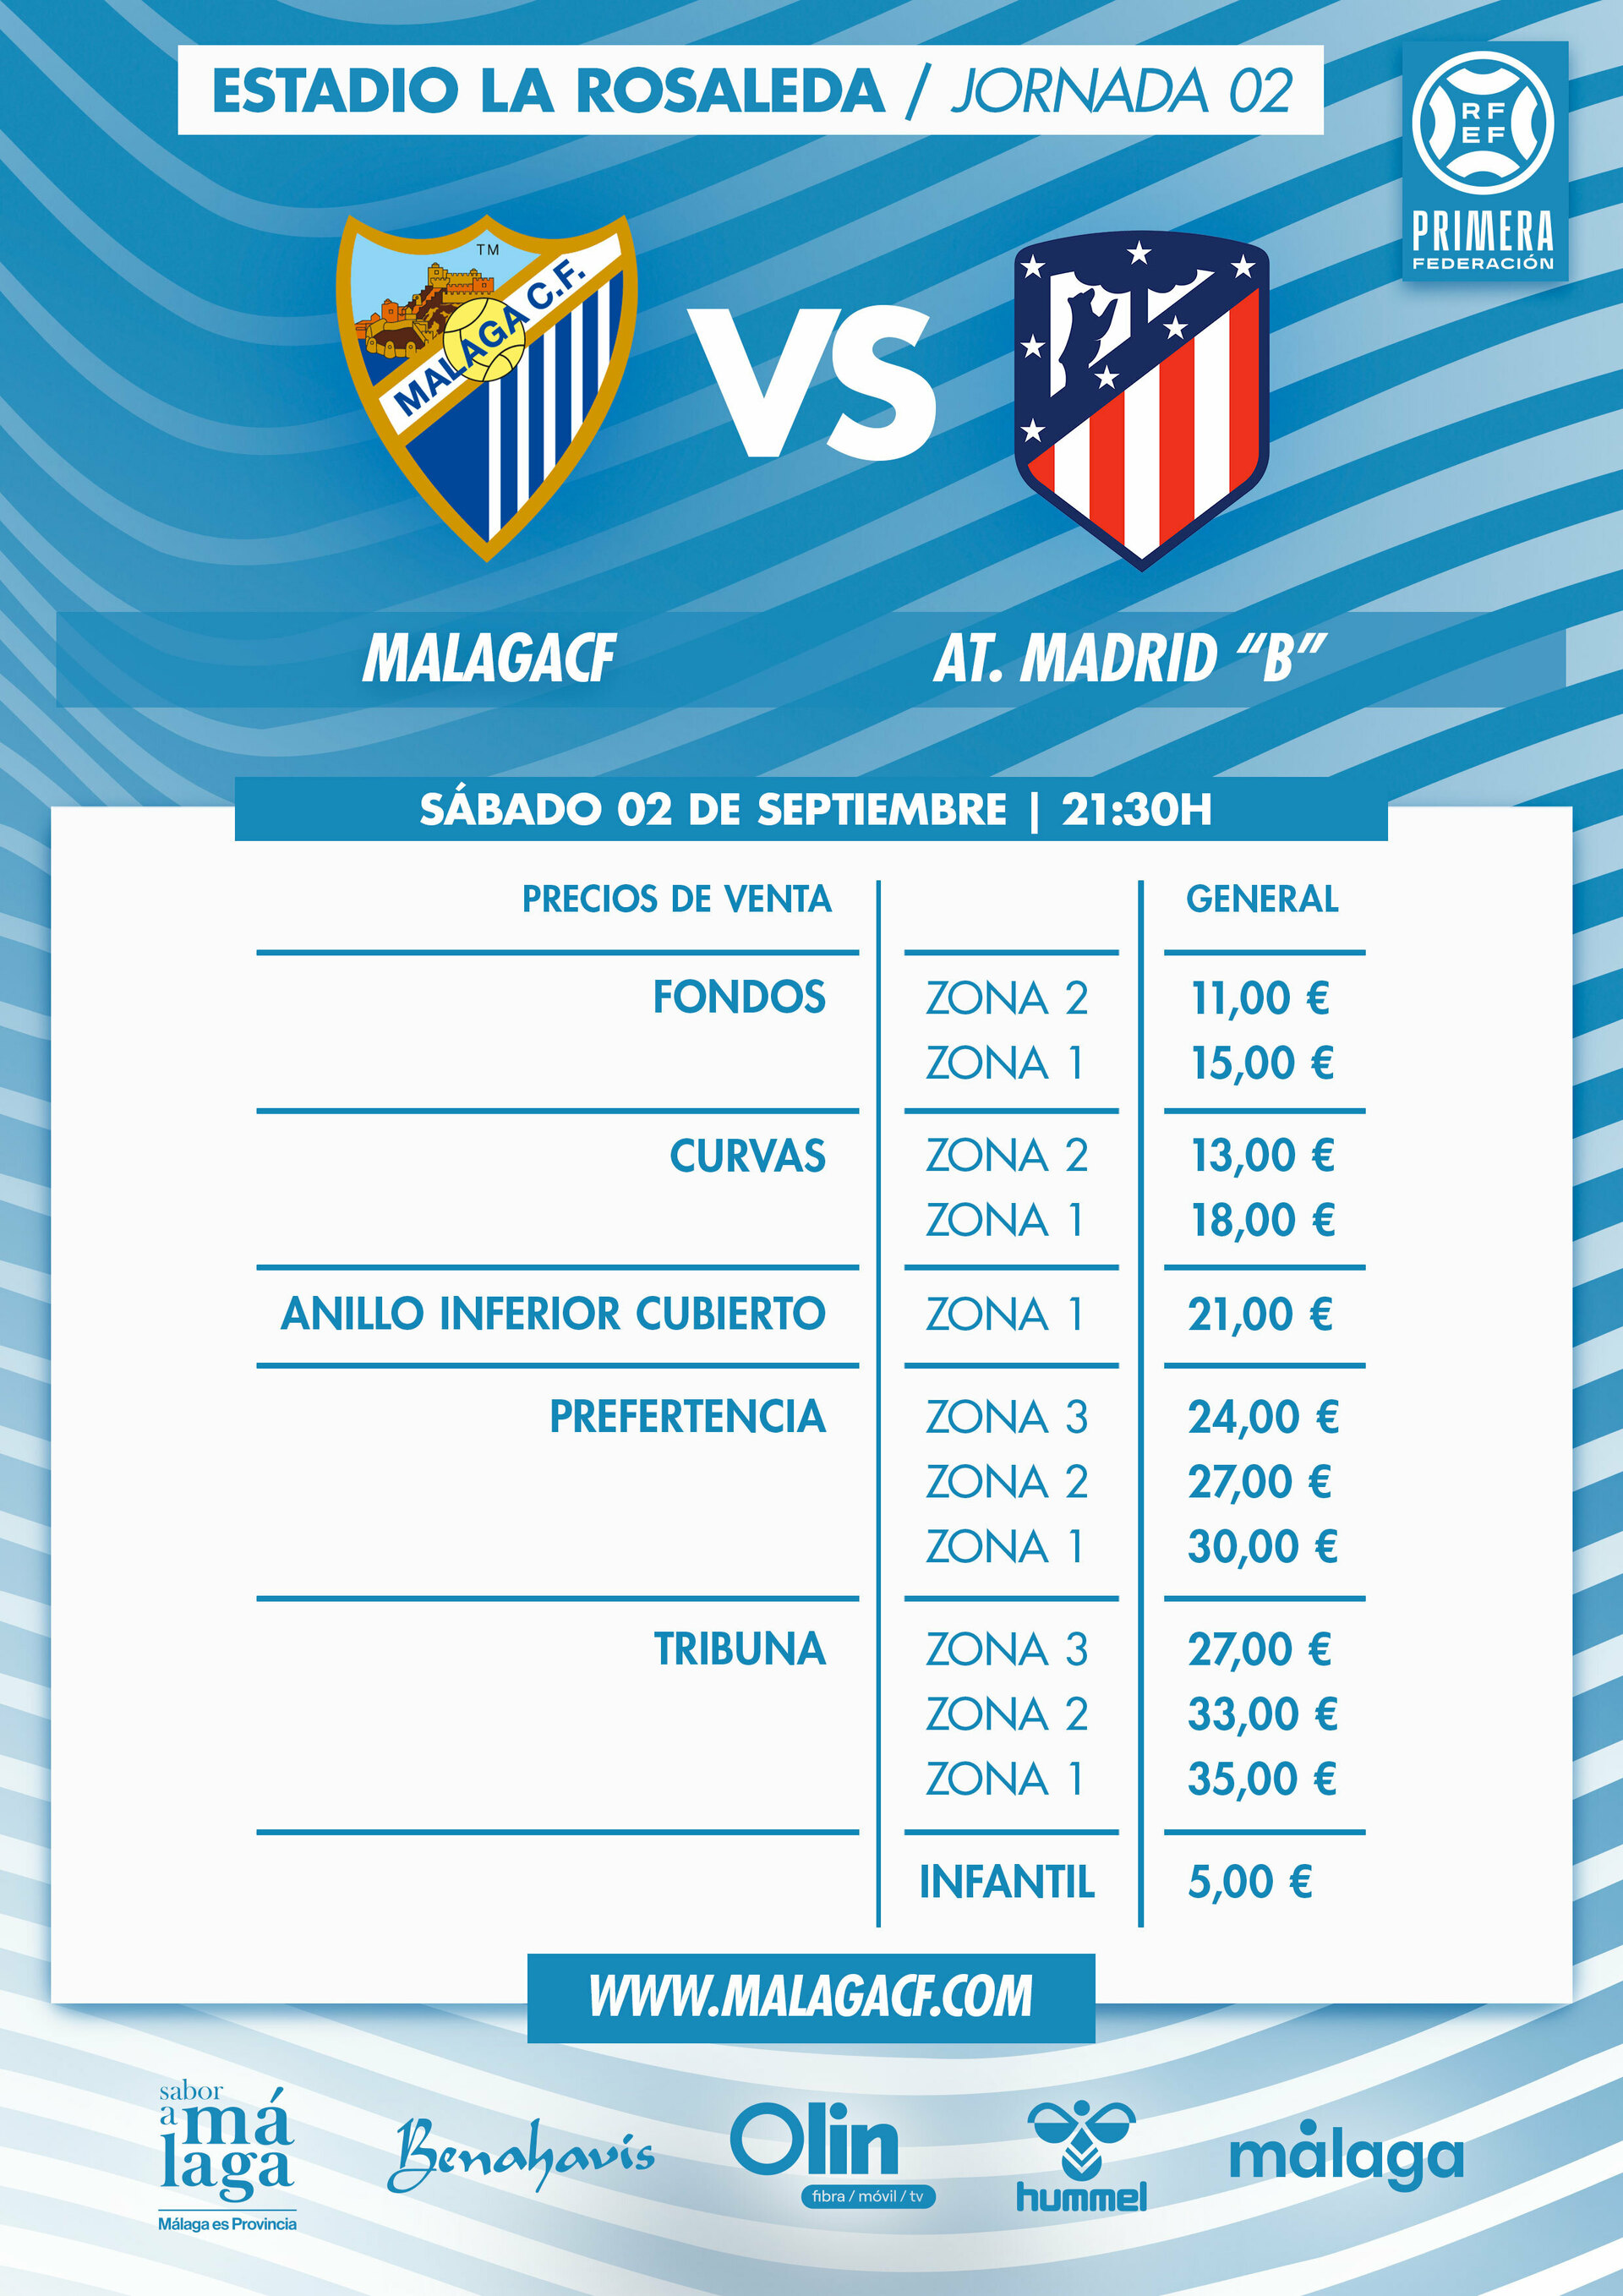 Malaga vs atletico madrid b